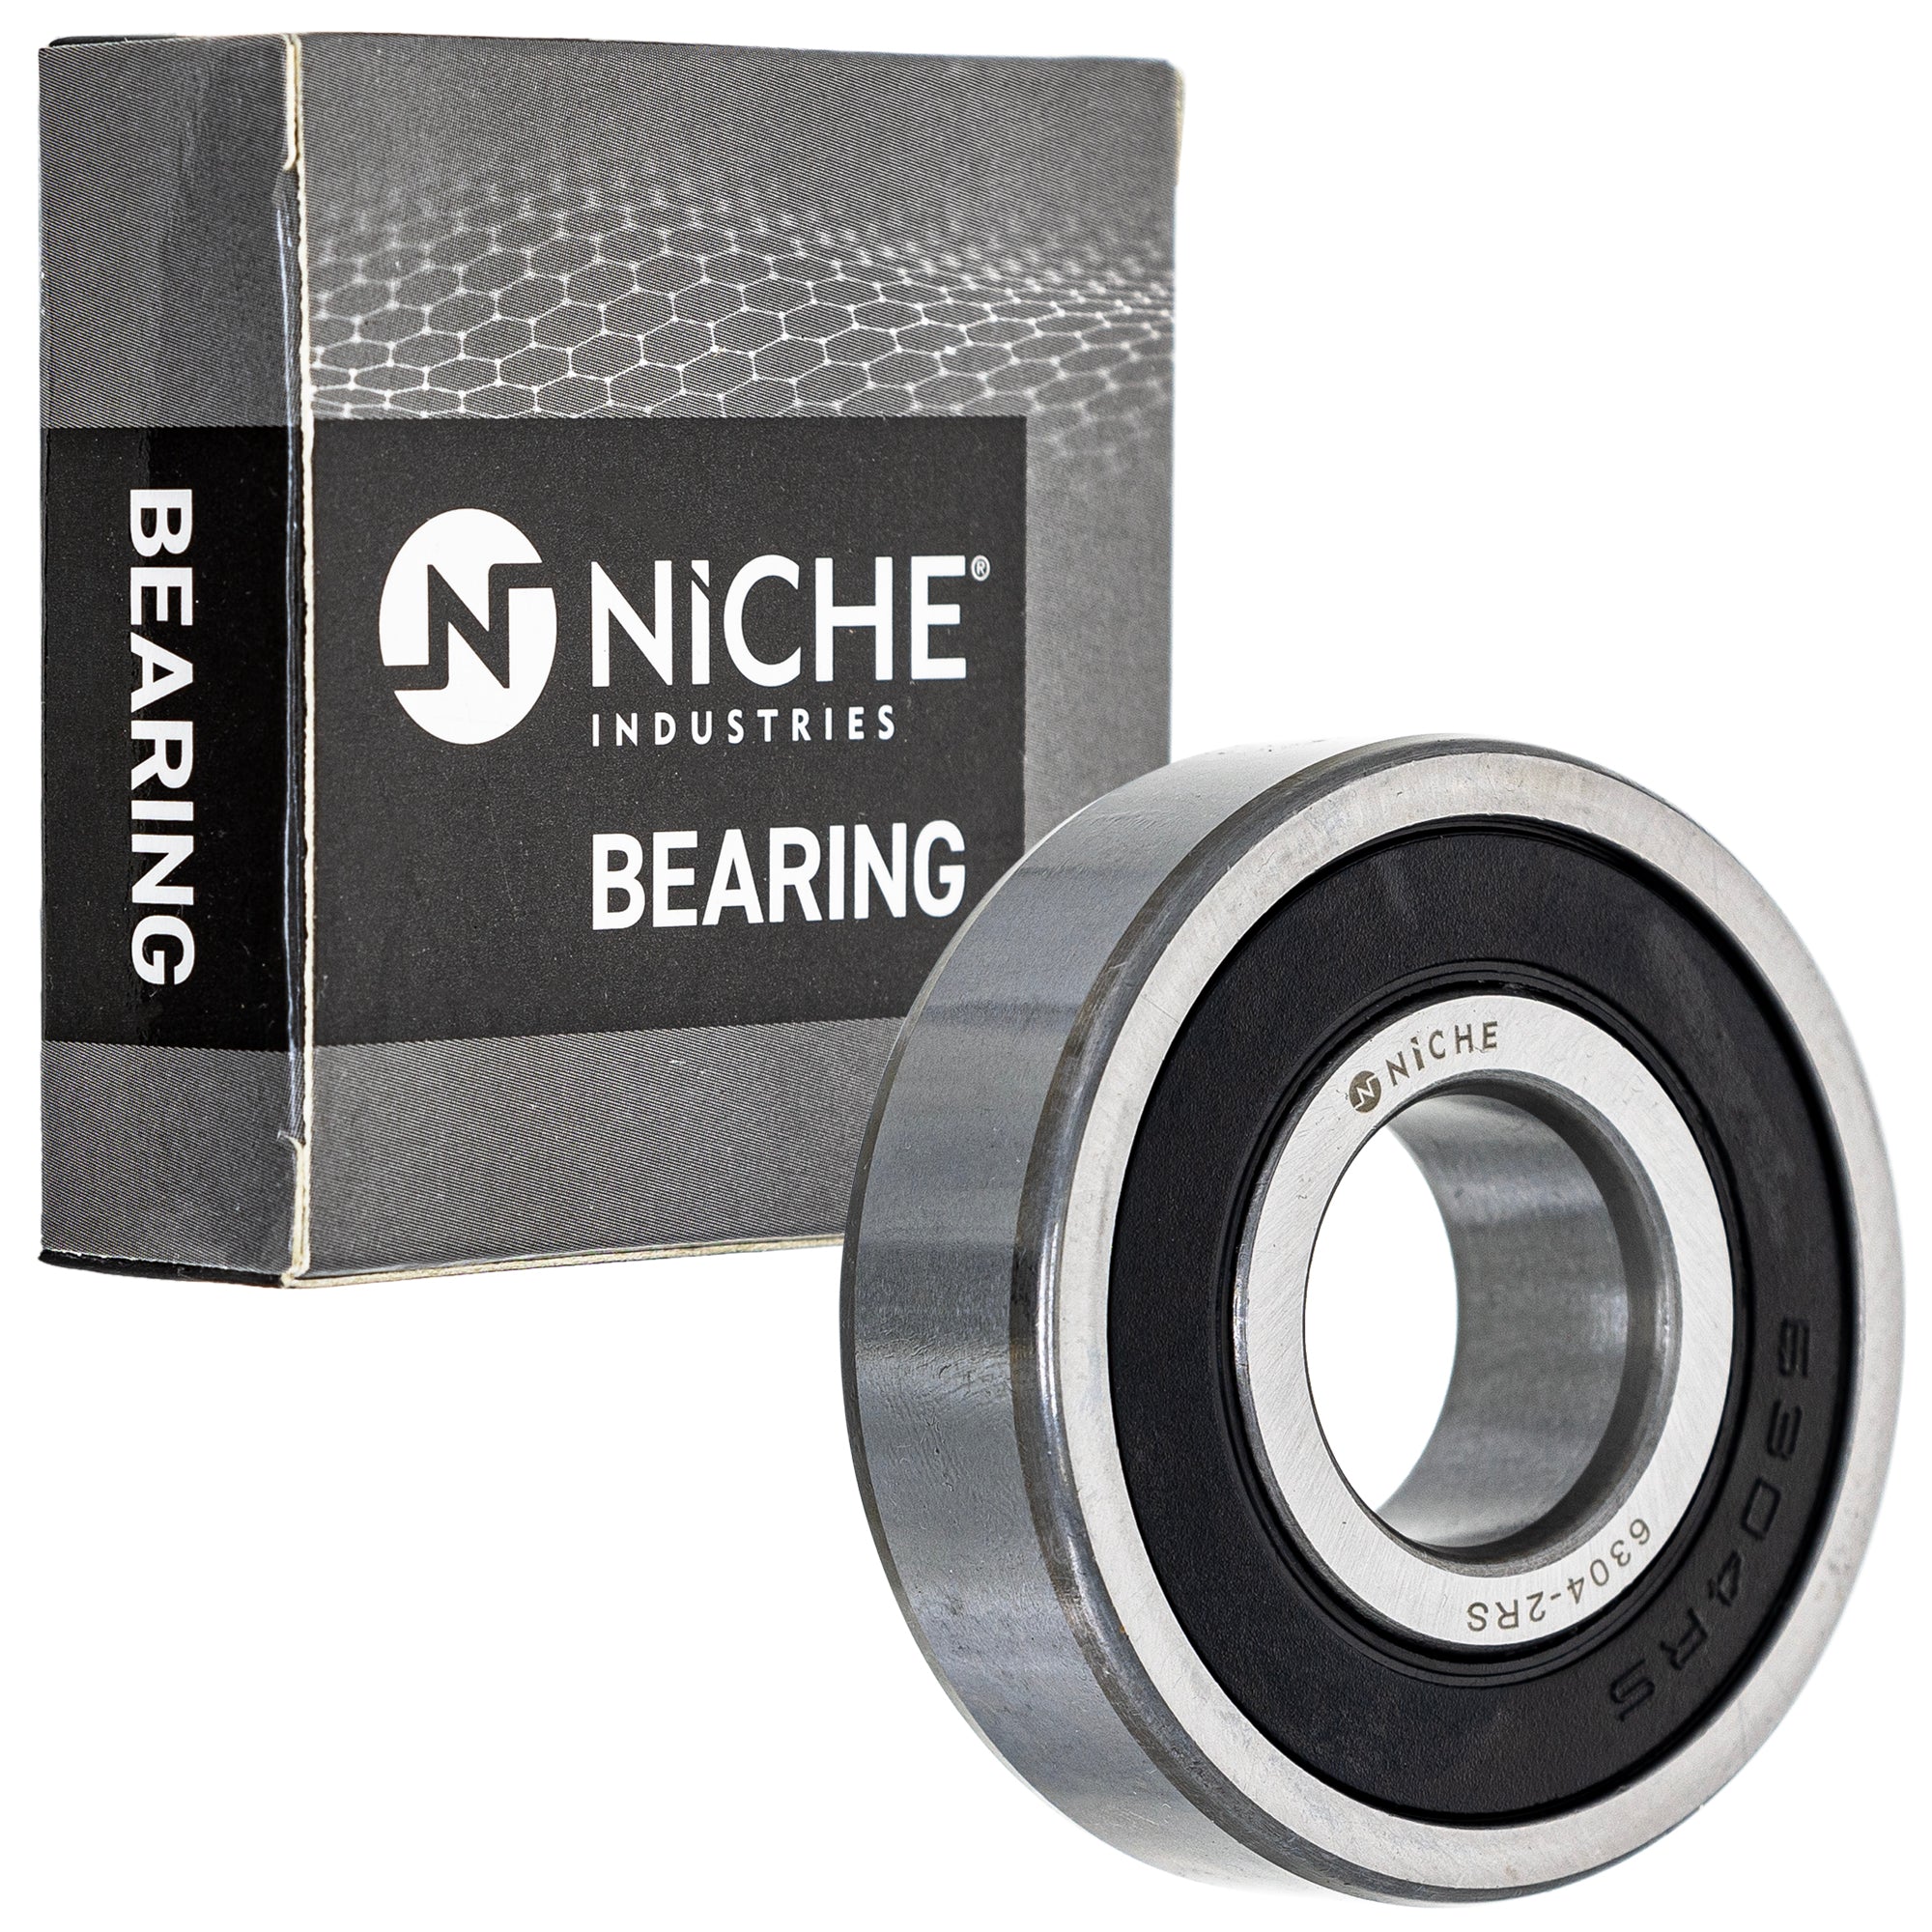 NICHE 519-CBB2244R Bearing for zOTHER VTX1800T3 VTX1800T2 VTX1800T1